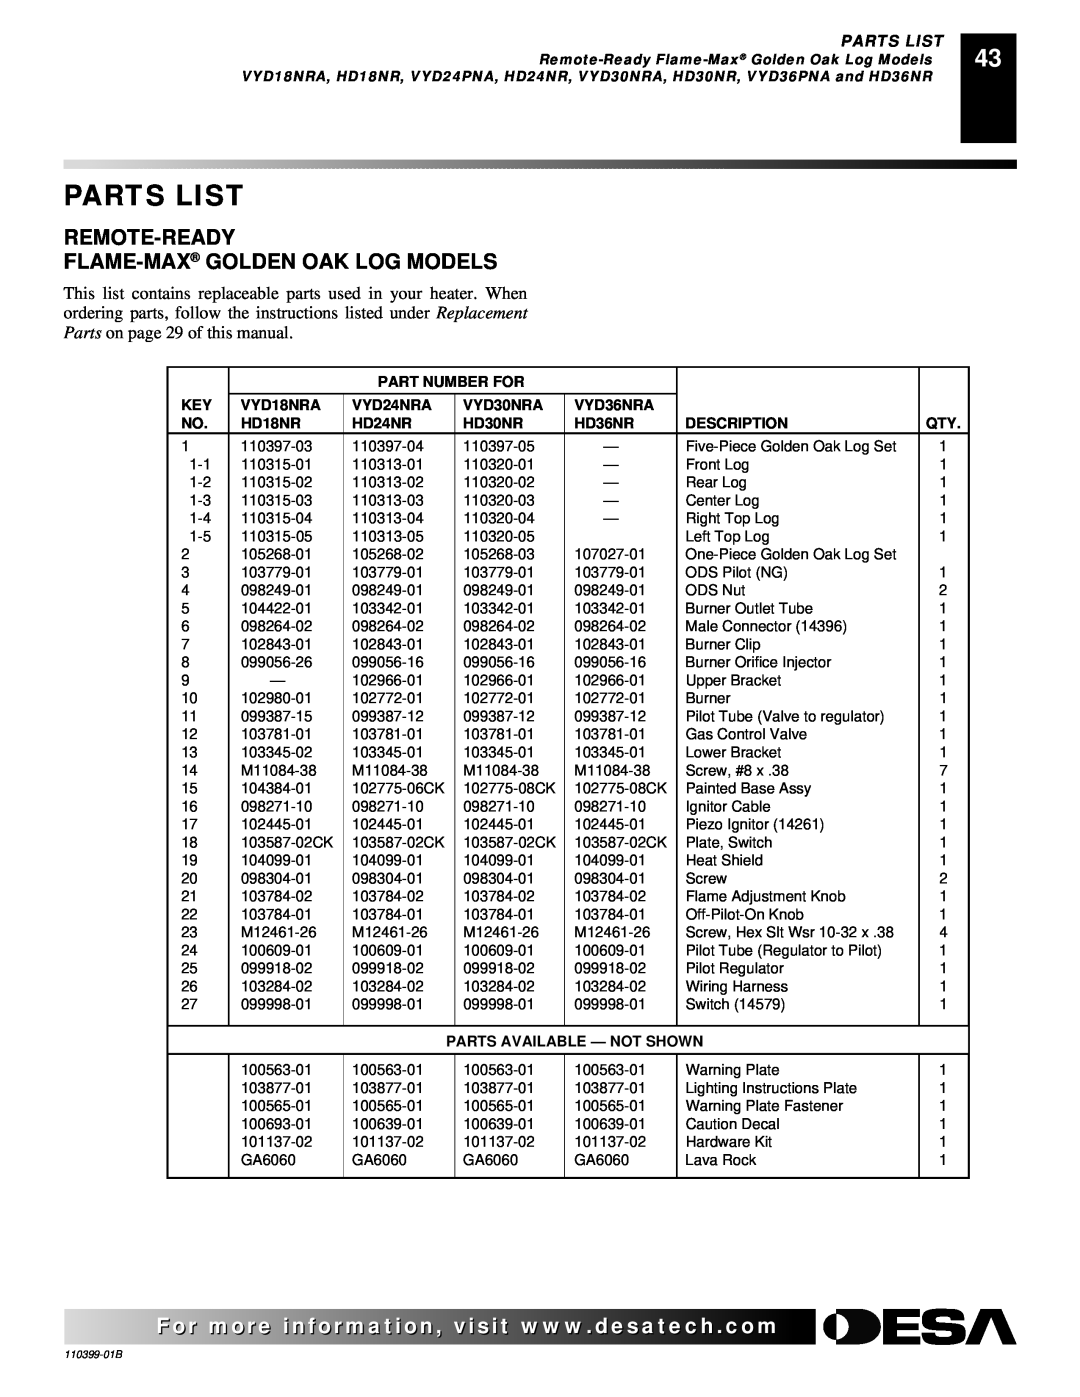 Desa LAME-MAX Golden Oak, FLAME-MAX VintageOak Parts List, Remote-Ready Flame-Max Golden Oak Log Models, Part Number For 